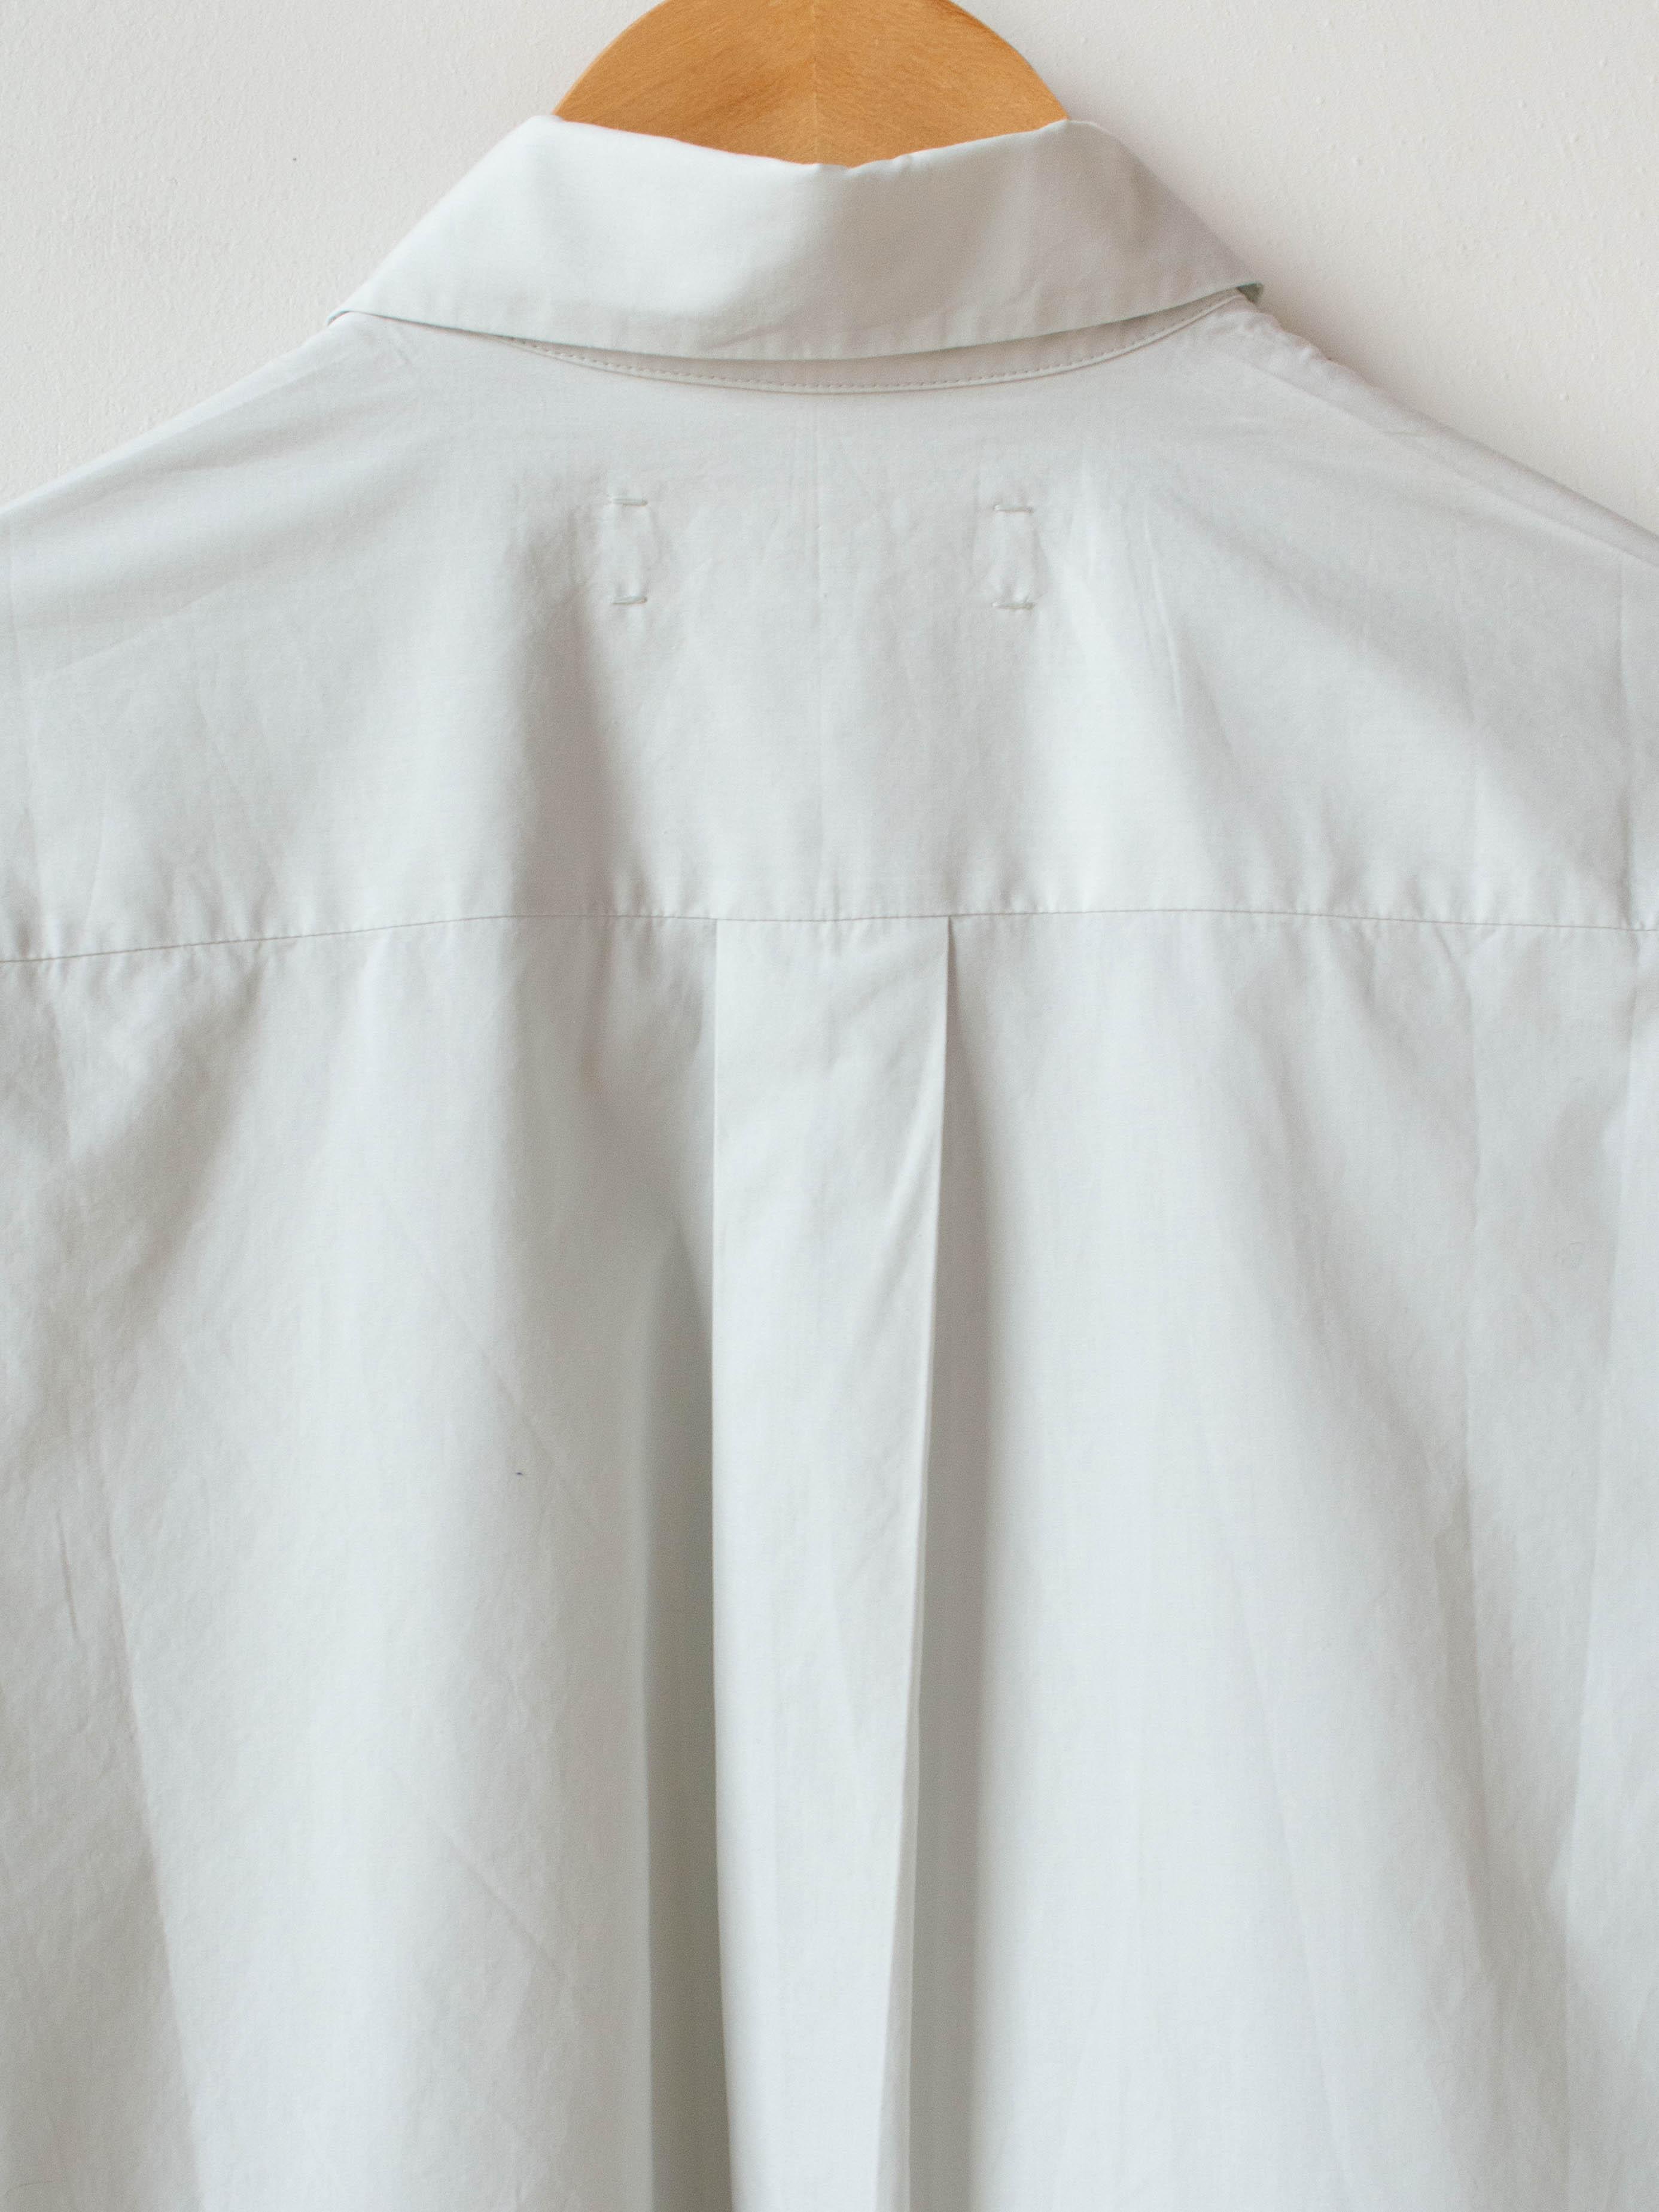 Namu Shop - Jan Machenhauer Palmo S/S Shirt - Shower Cotton Poplin